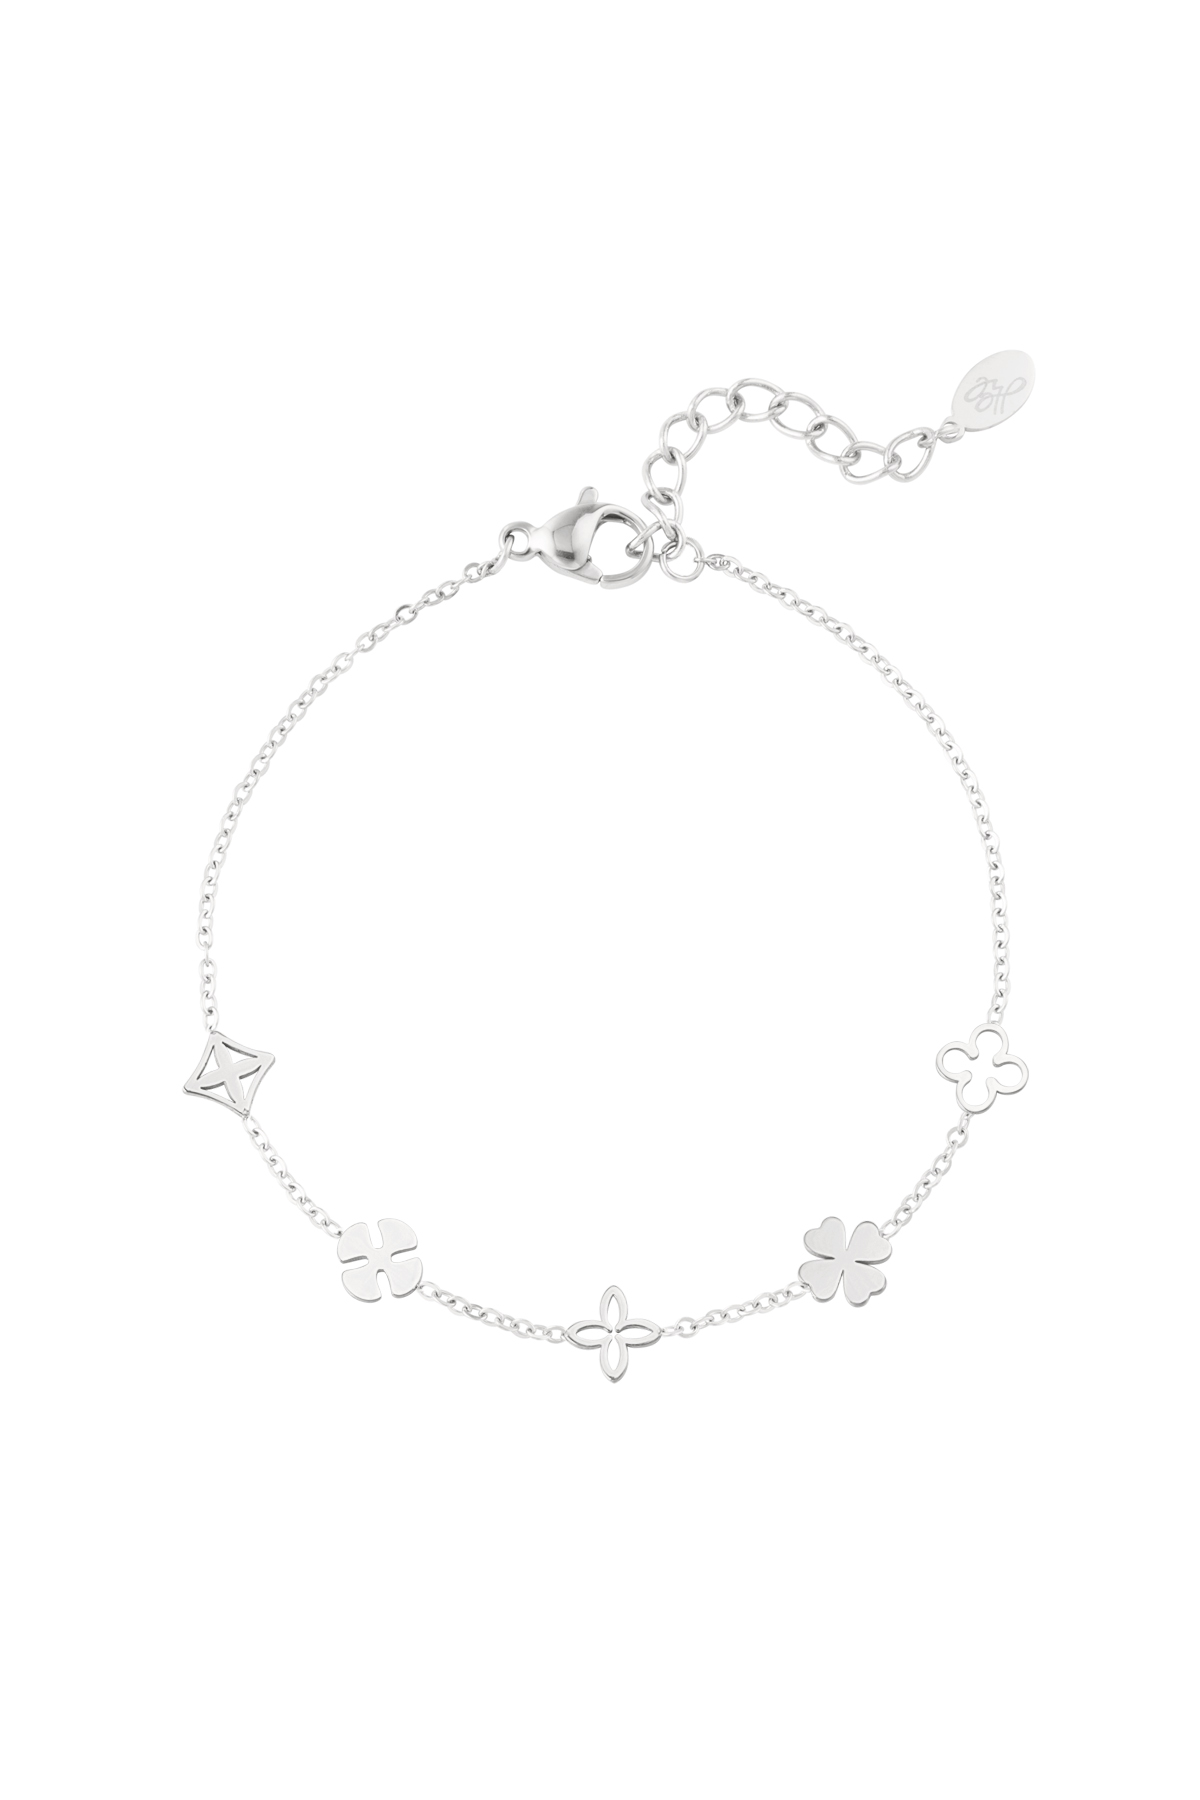 Bracelet five charms - silver